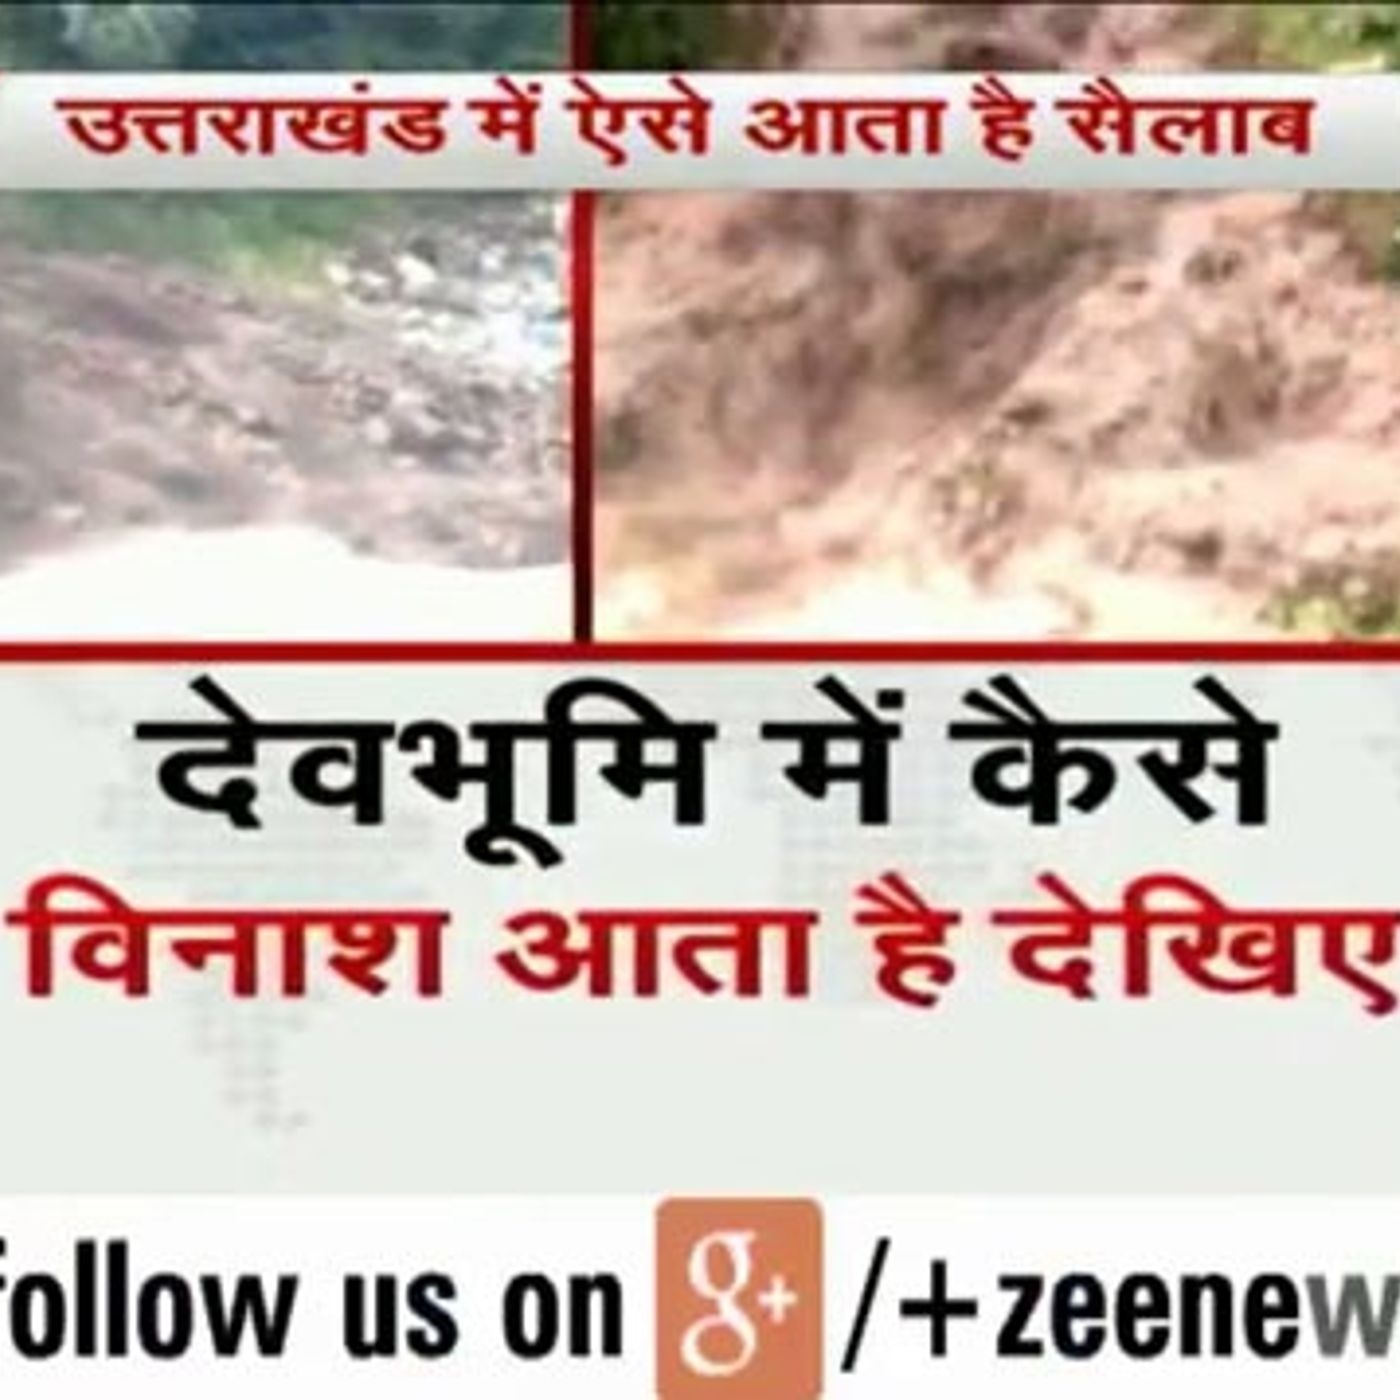 Uttarakhand Cloudburst wreak hovoc in Bhatwari area, more rains to come